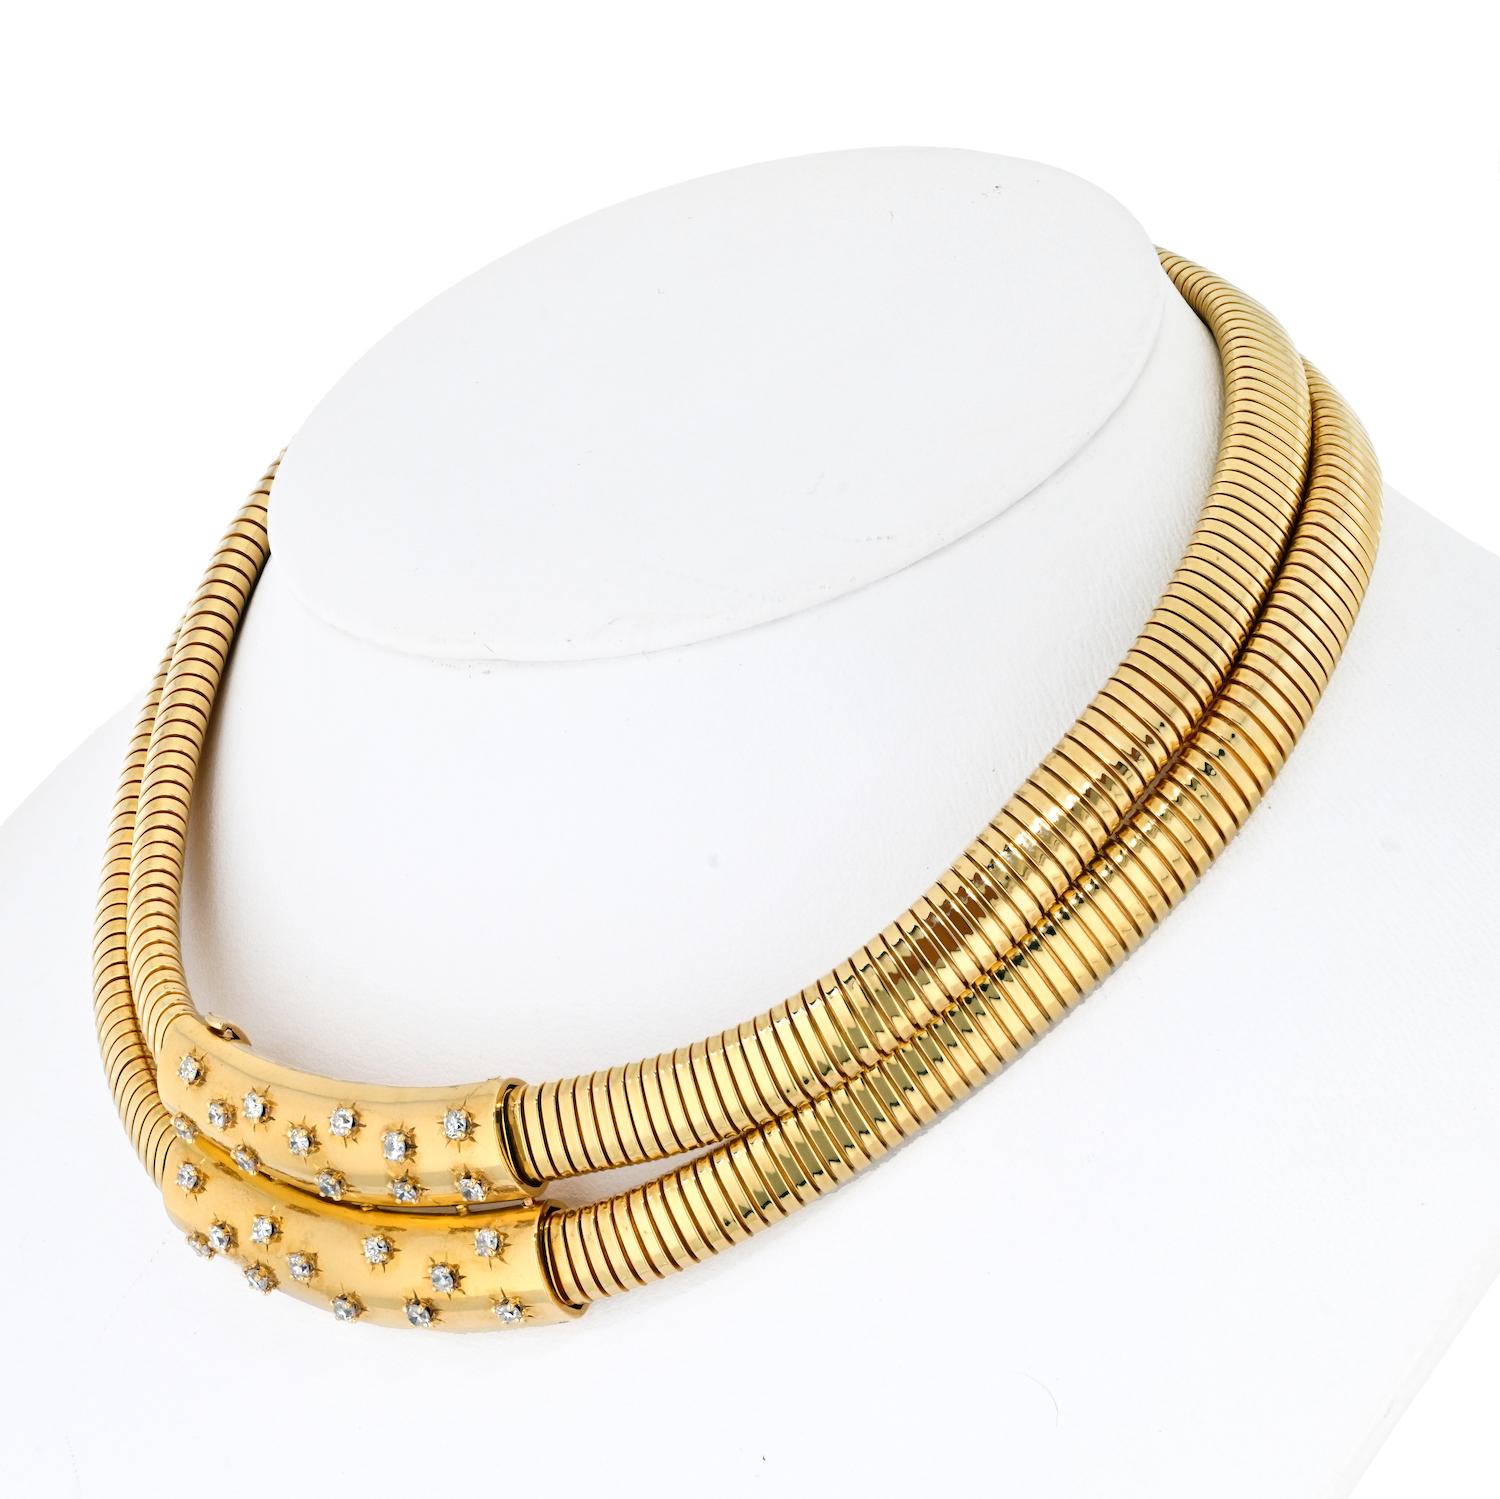 Modern Van Cleef & Arpels 18K Yellow Gold Flexible Double Chain Choker Necklace